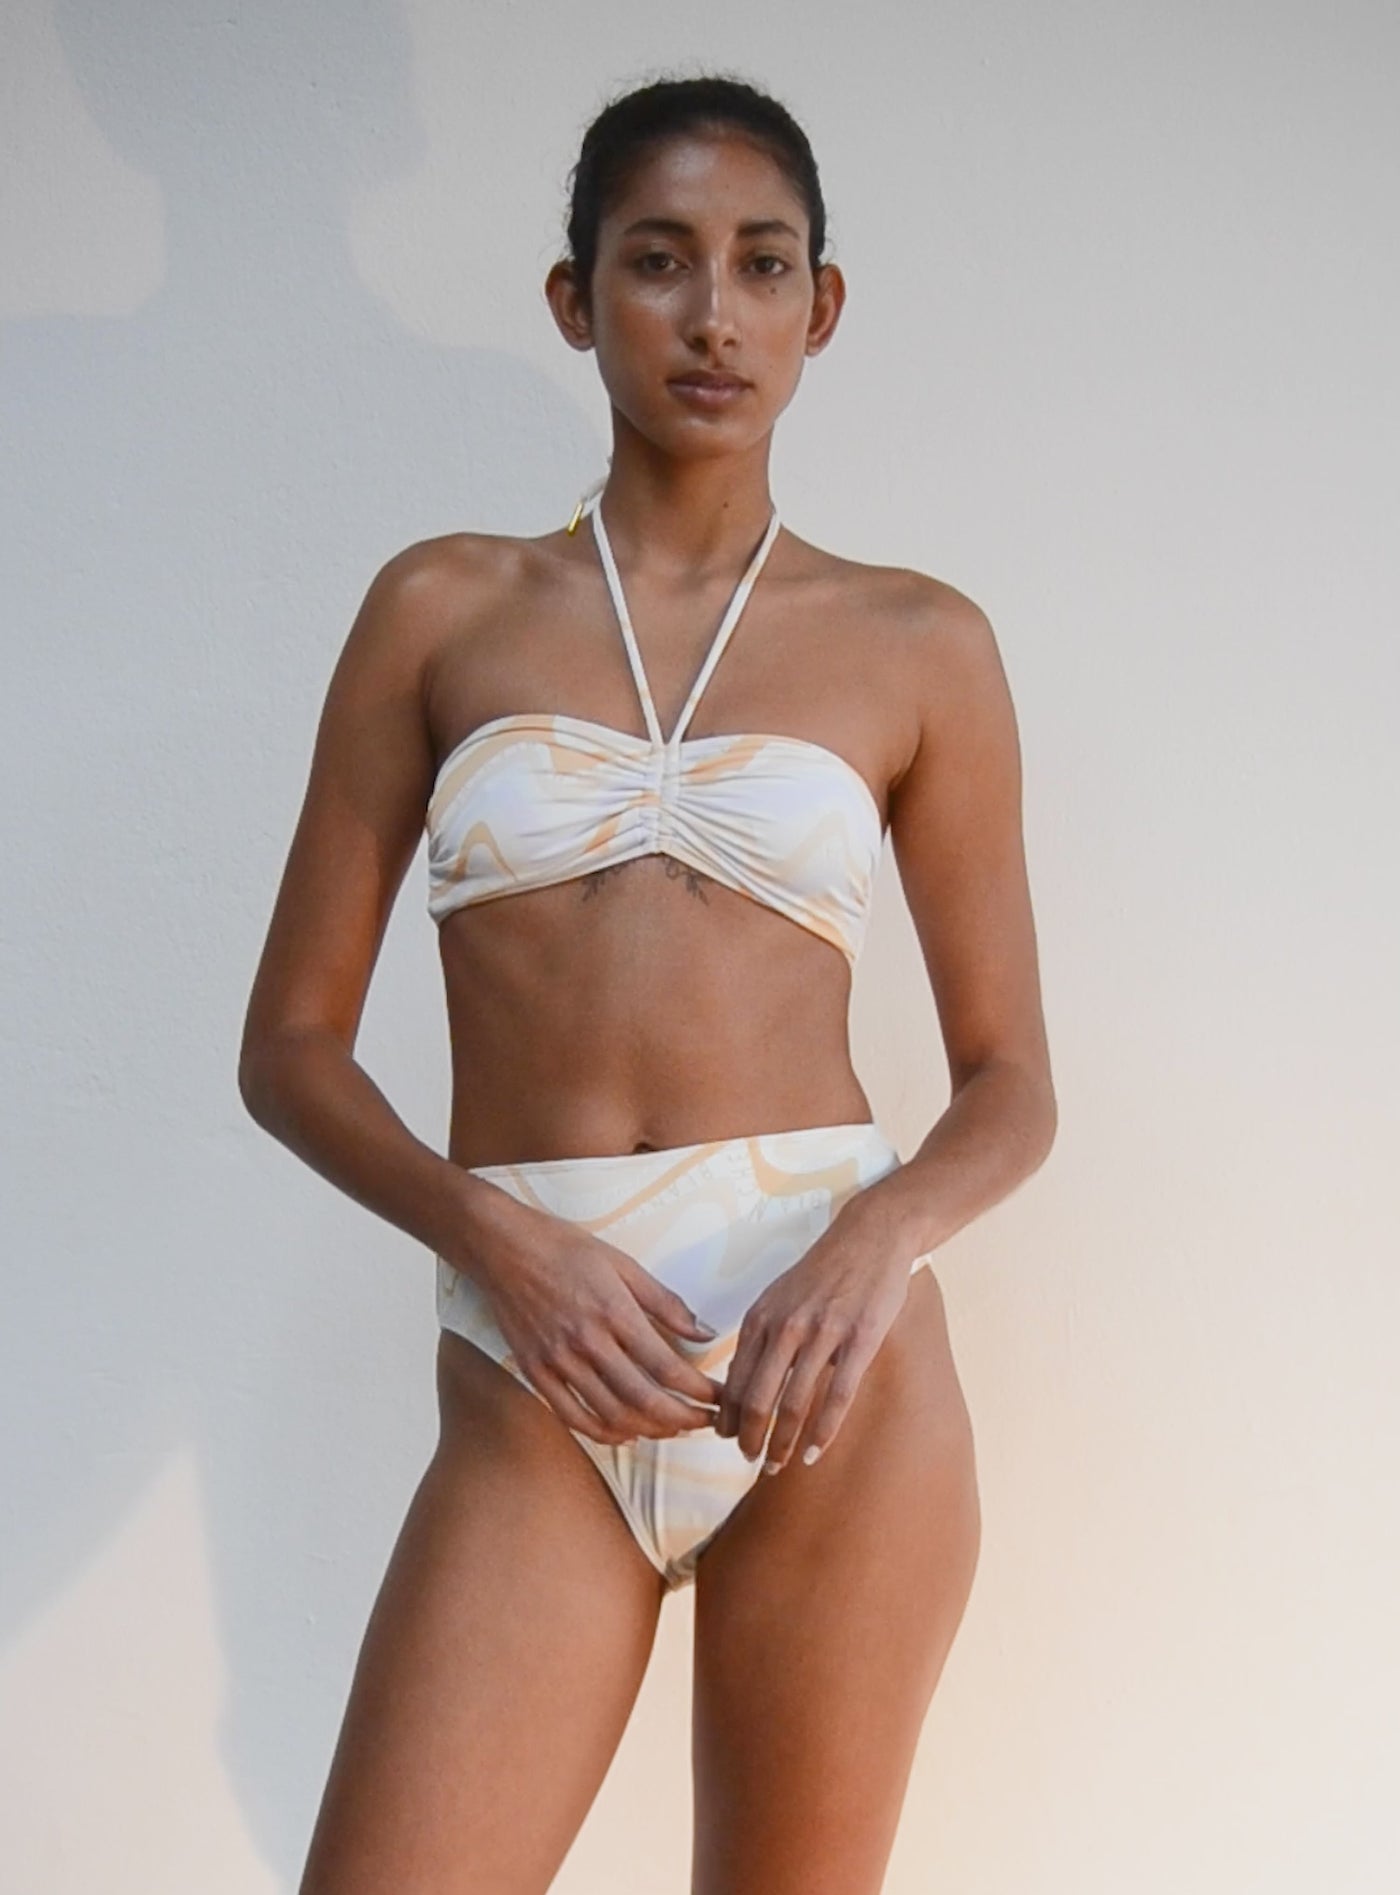 Short video of our model in Brigitte Bikini Bandeau.